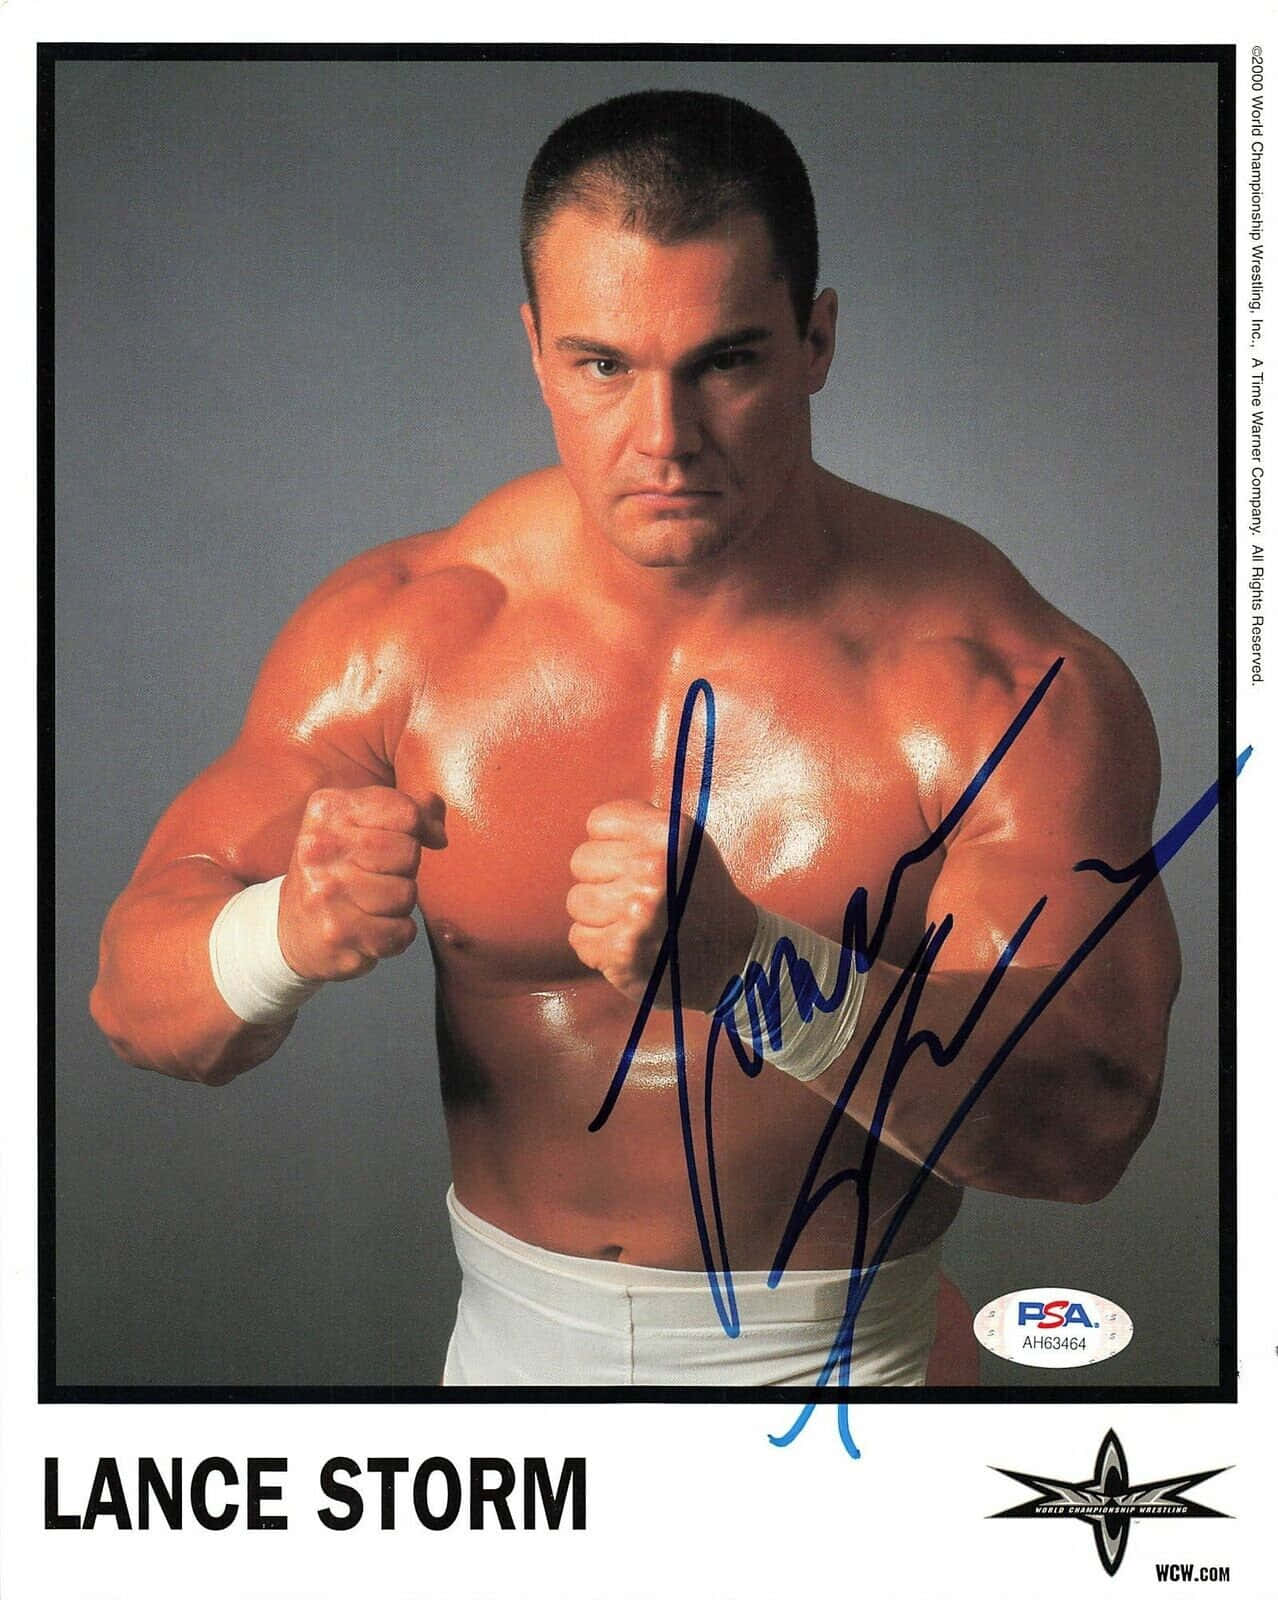 Cool Autographed Canadian Professional Wrestler Lance Storm Wallpaper